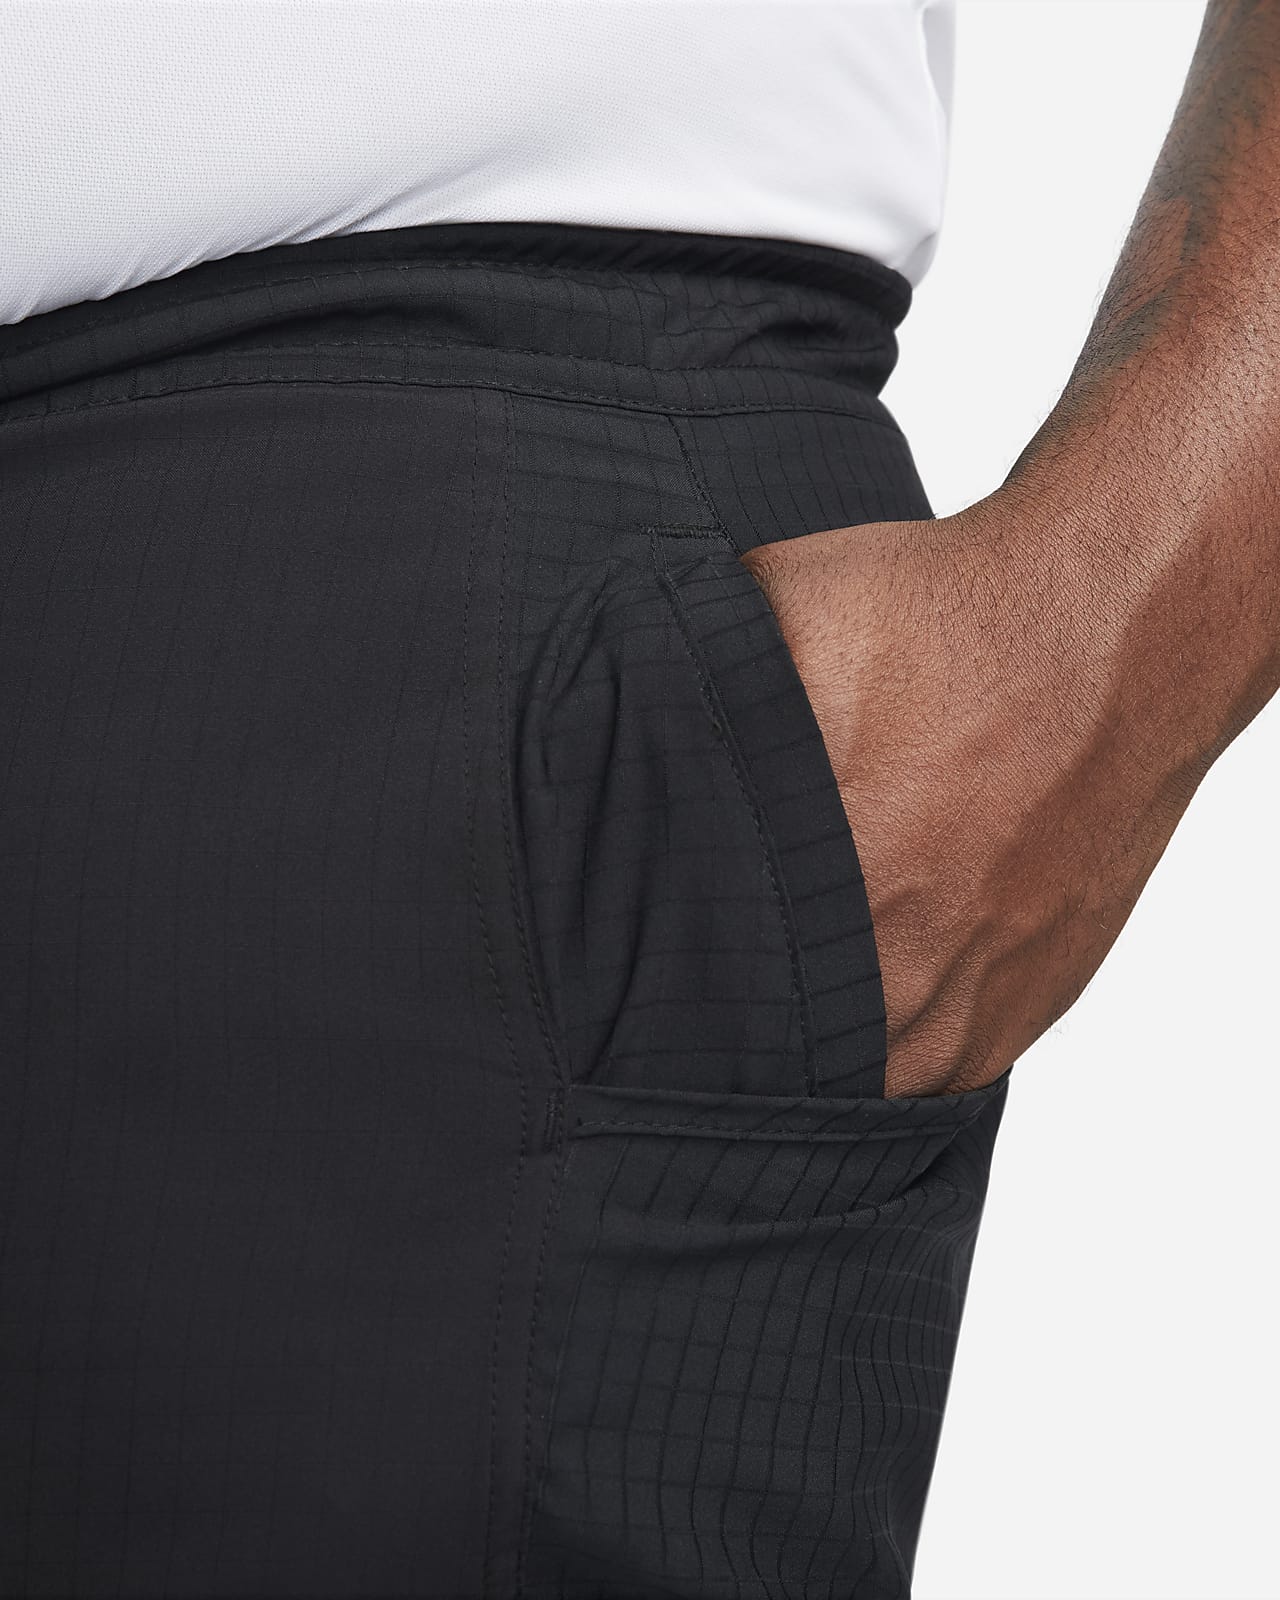 Nike Dri-FIT ADV A.P.S. Men's Woven Fitness Pants.